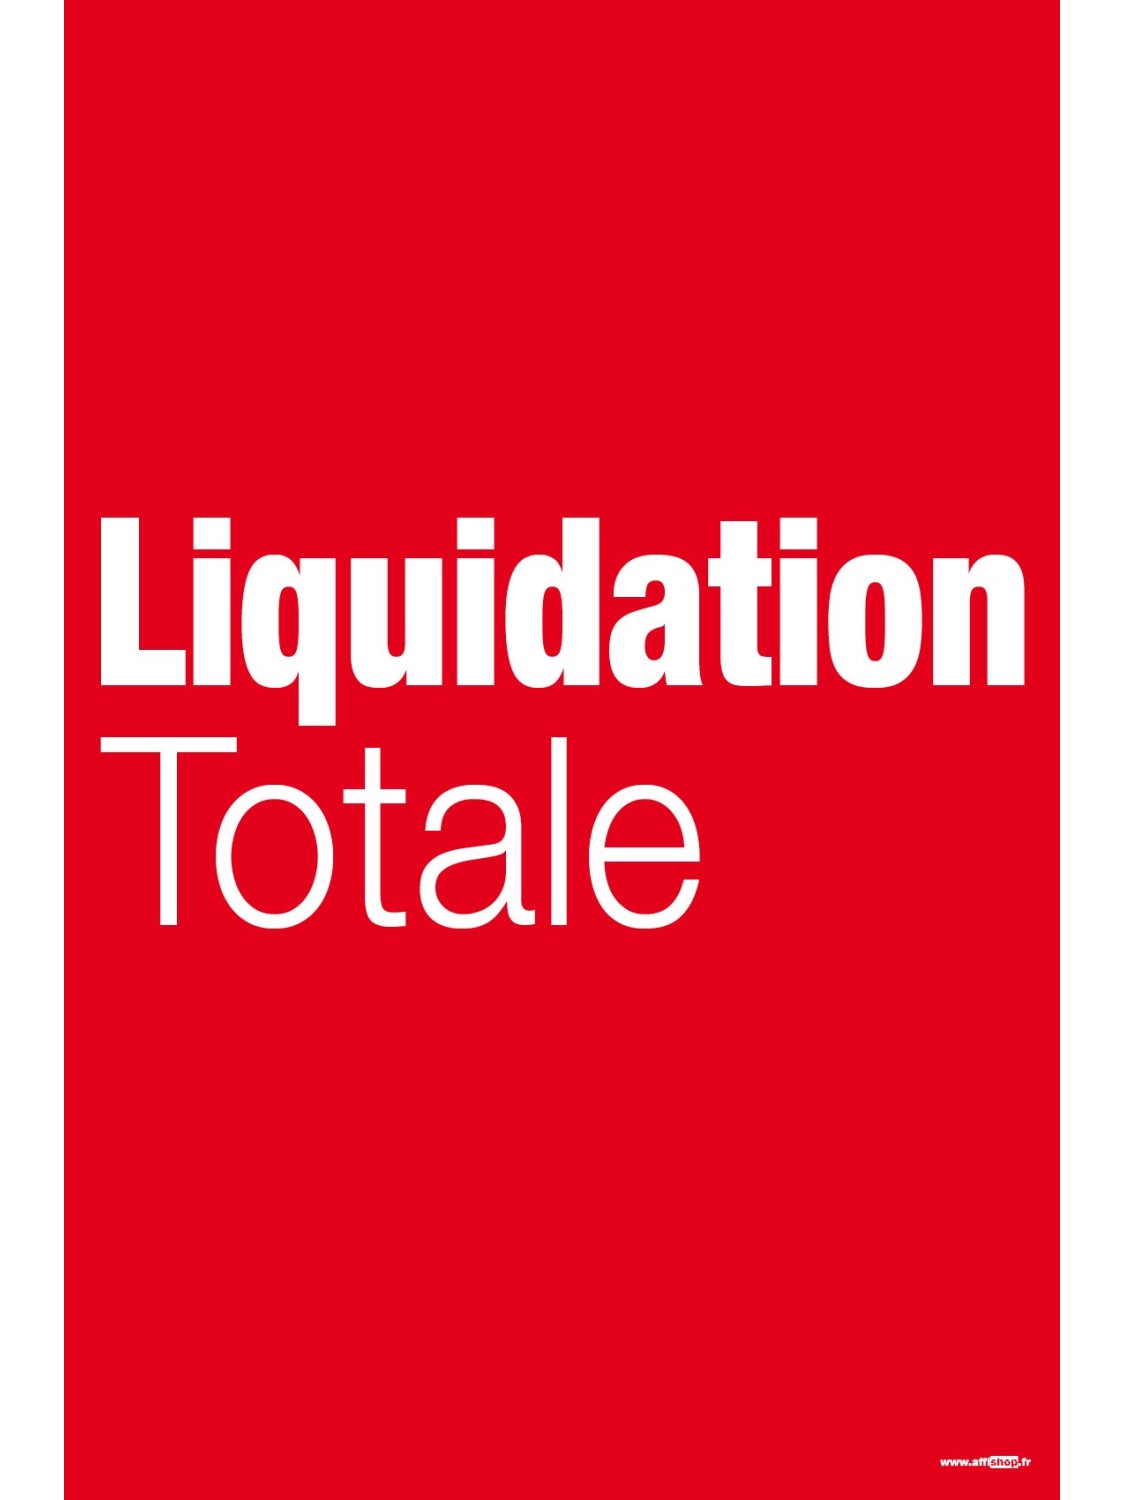 Affiche "liquidation totale"